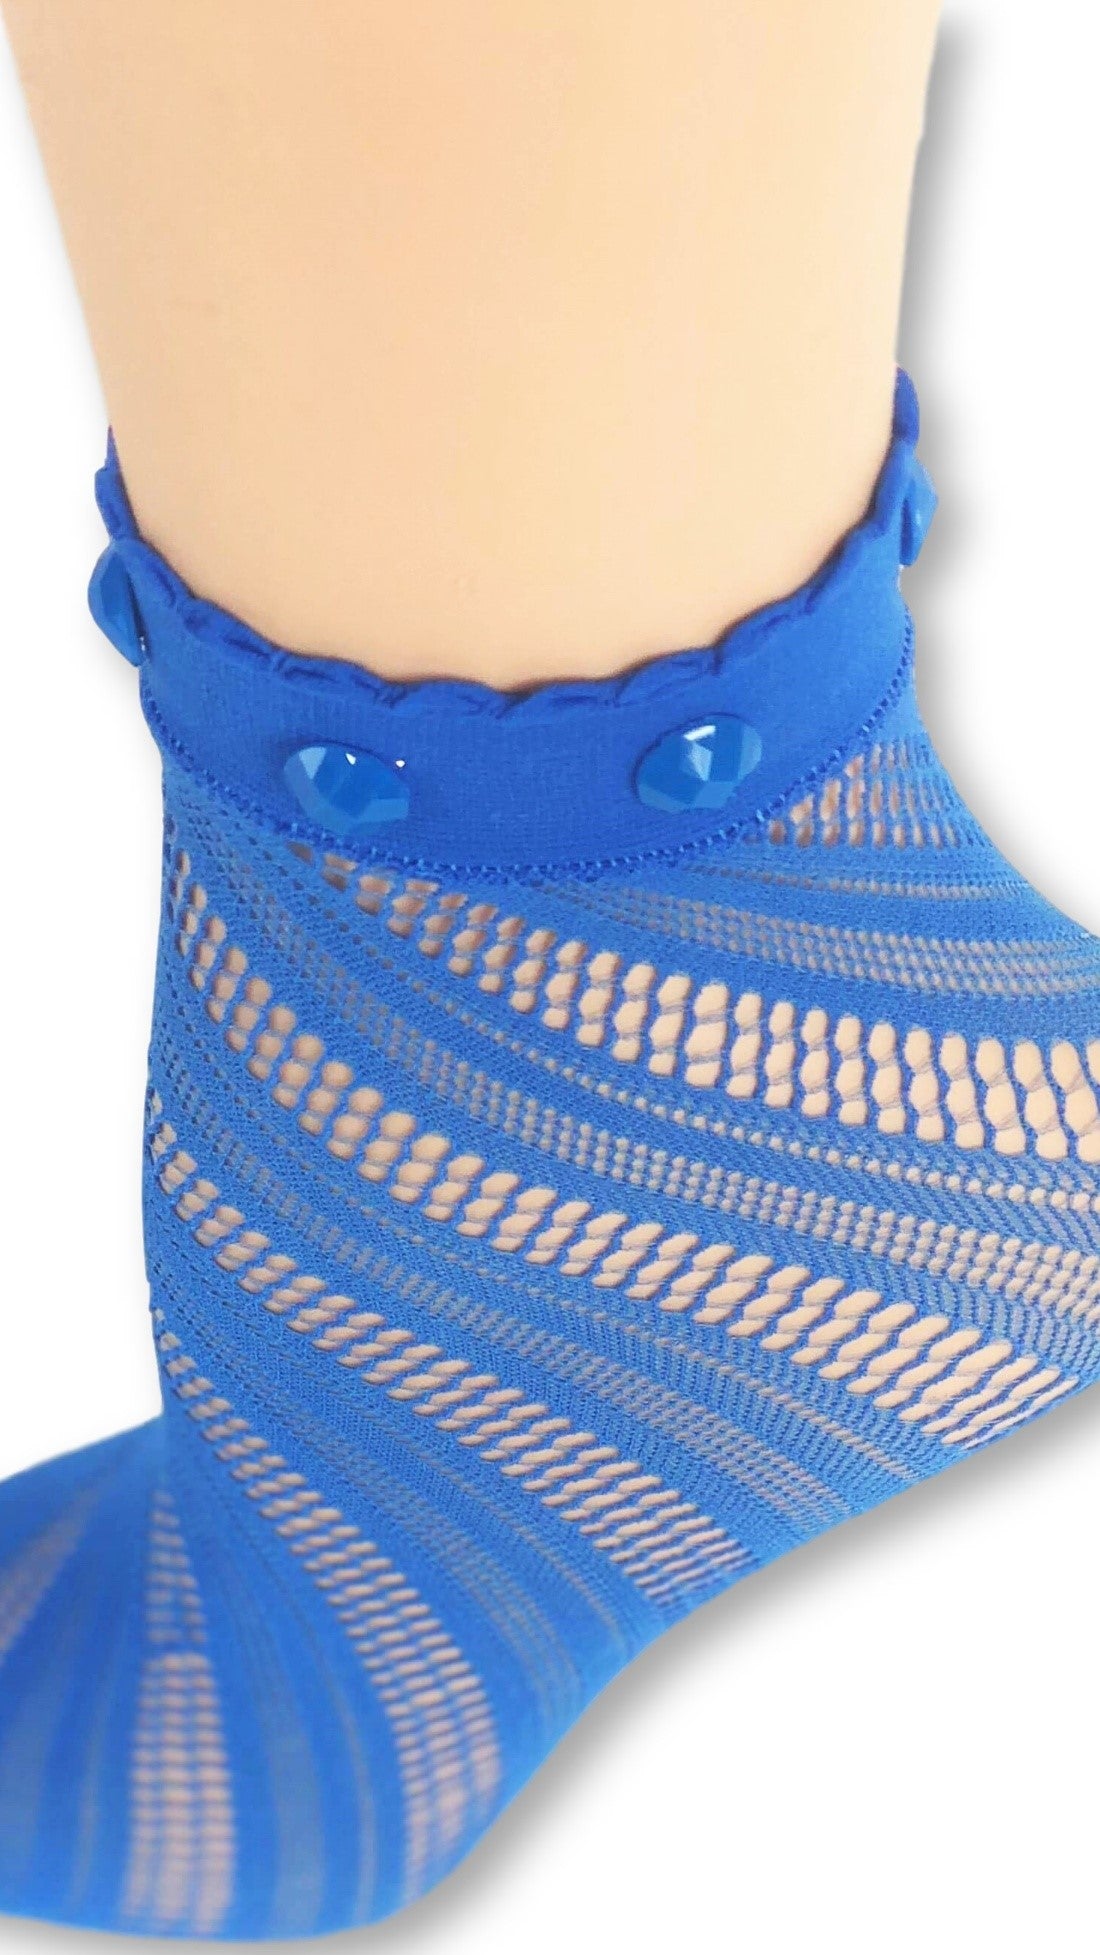 Charming Blue Custom Mesh Socks with beads - Global Trendz Fashion®